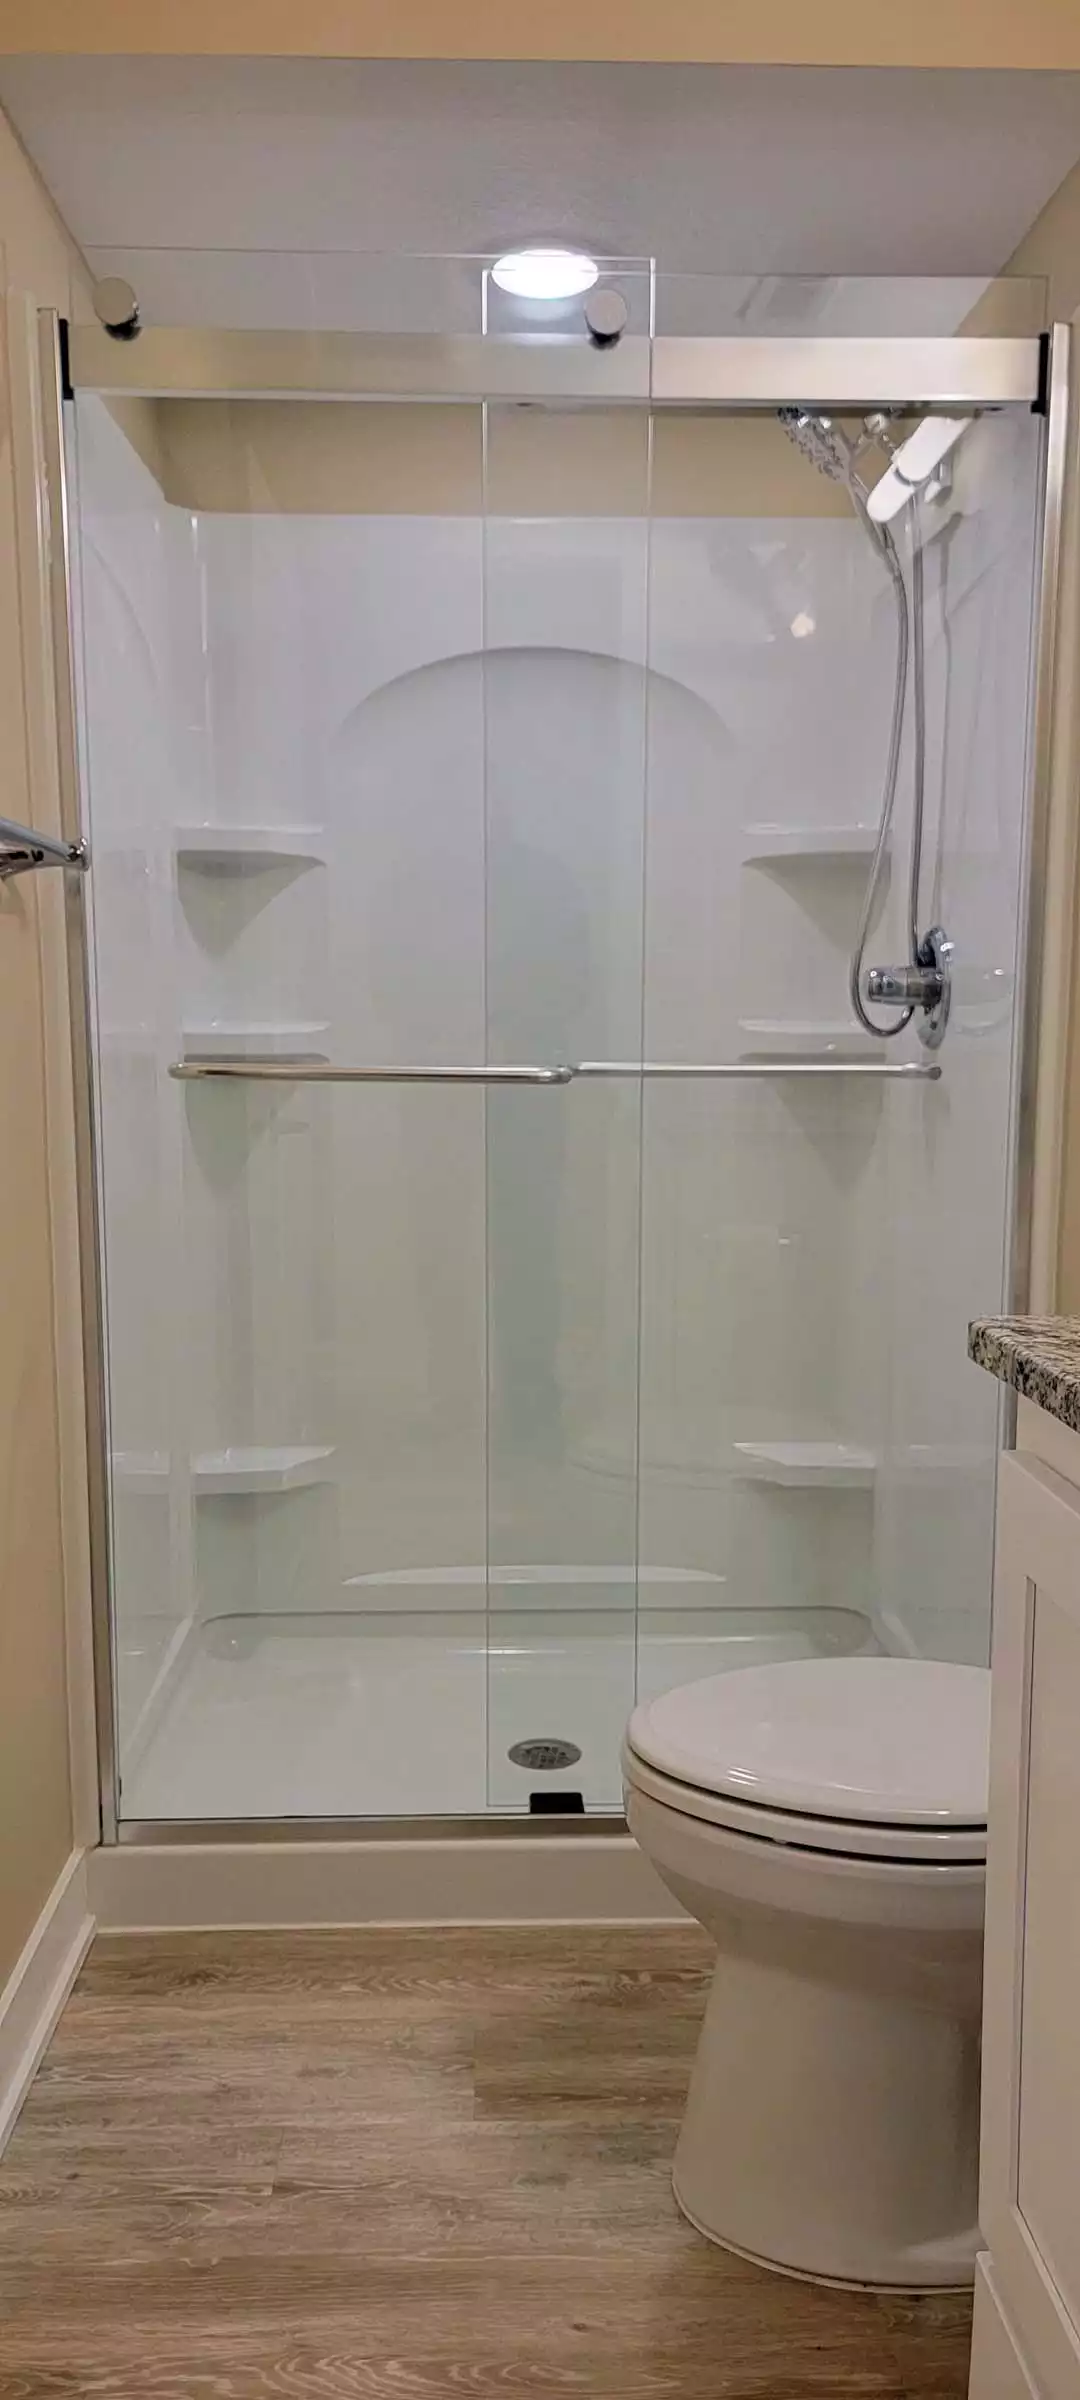 Acrylic shower enclosure